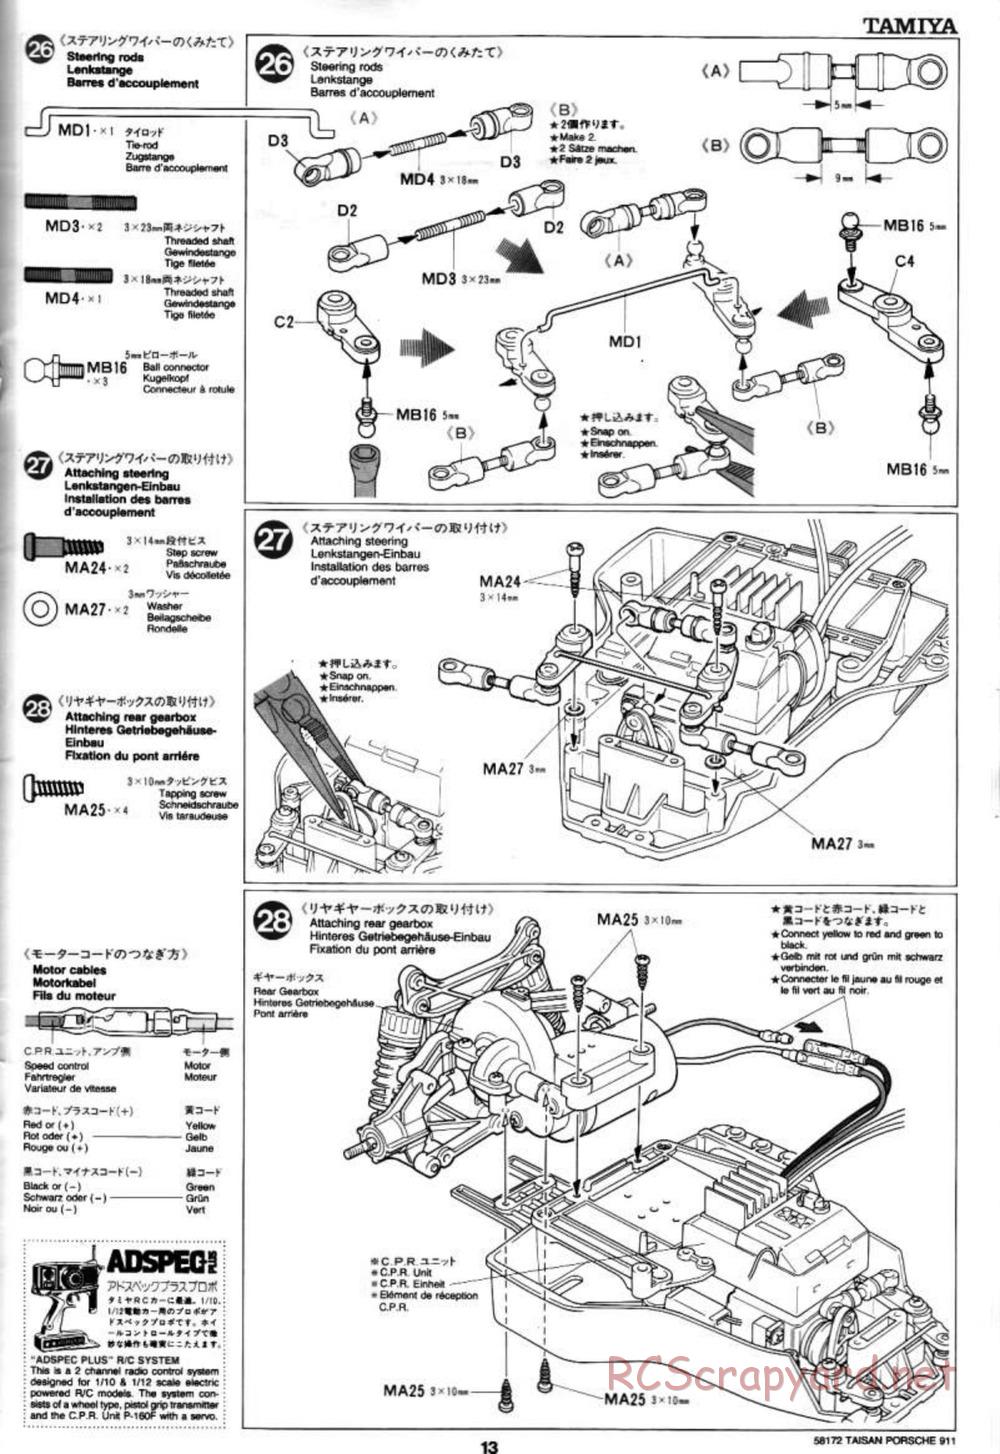 Tamiya - Taisan Starcard Porsche 911 GT2 - TA-02SW Chassis - Manual - Page 13